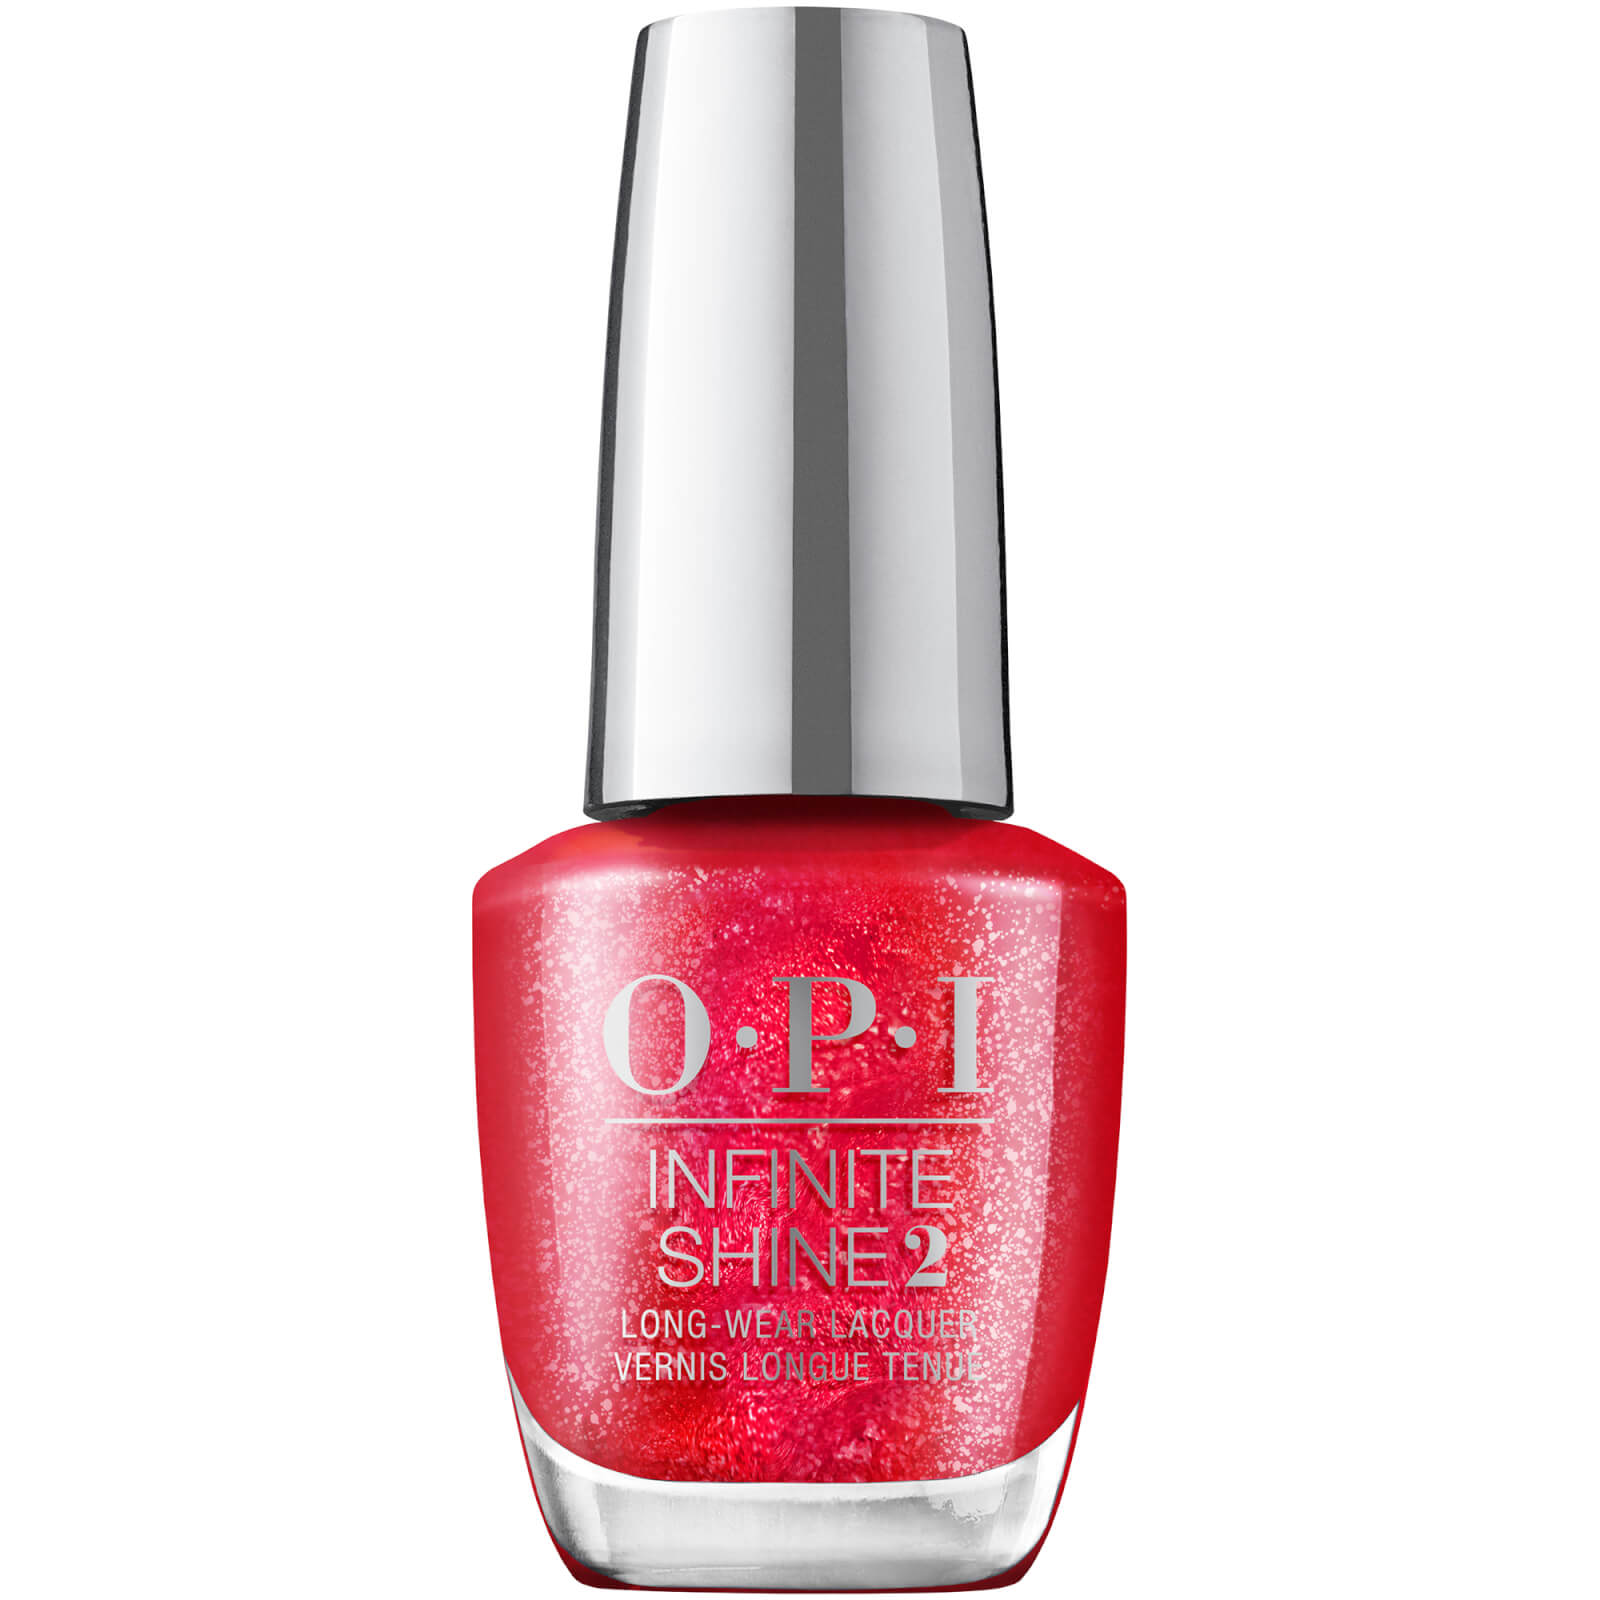 Opi Jewel Be Bold Collection Infinite Shine Nail Polish 15ml (various Shades) - Rhinestone Red-y